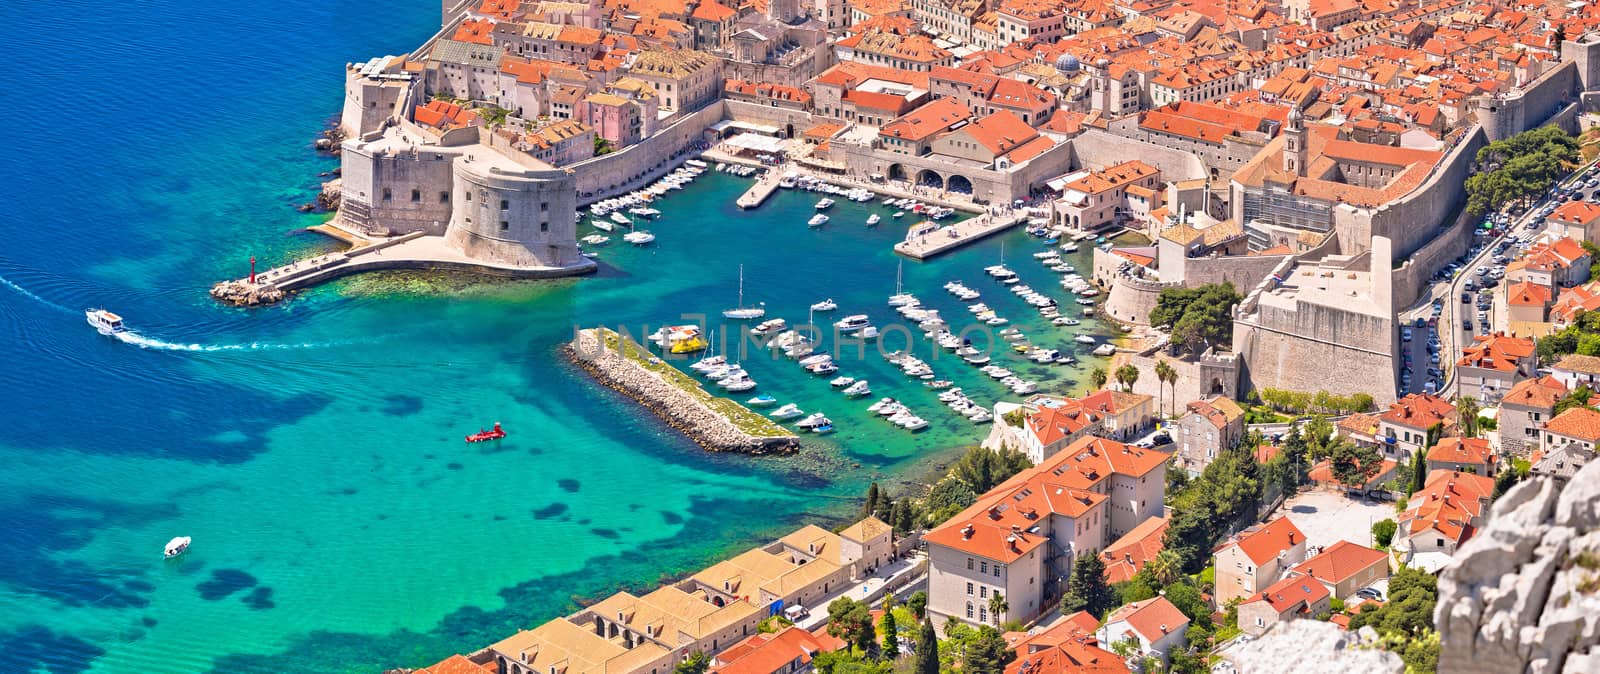 Dubrovnik. Aerial panoramic view of Dubrovnik harbor, colorful famous tourist destination in Dalmatia region of Croatia